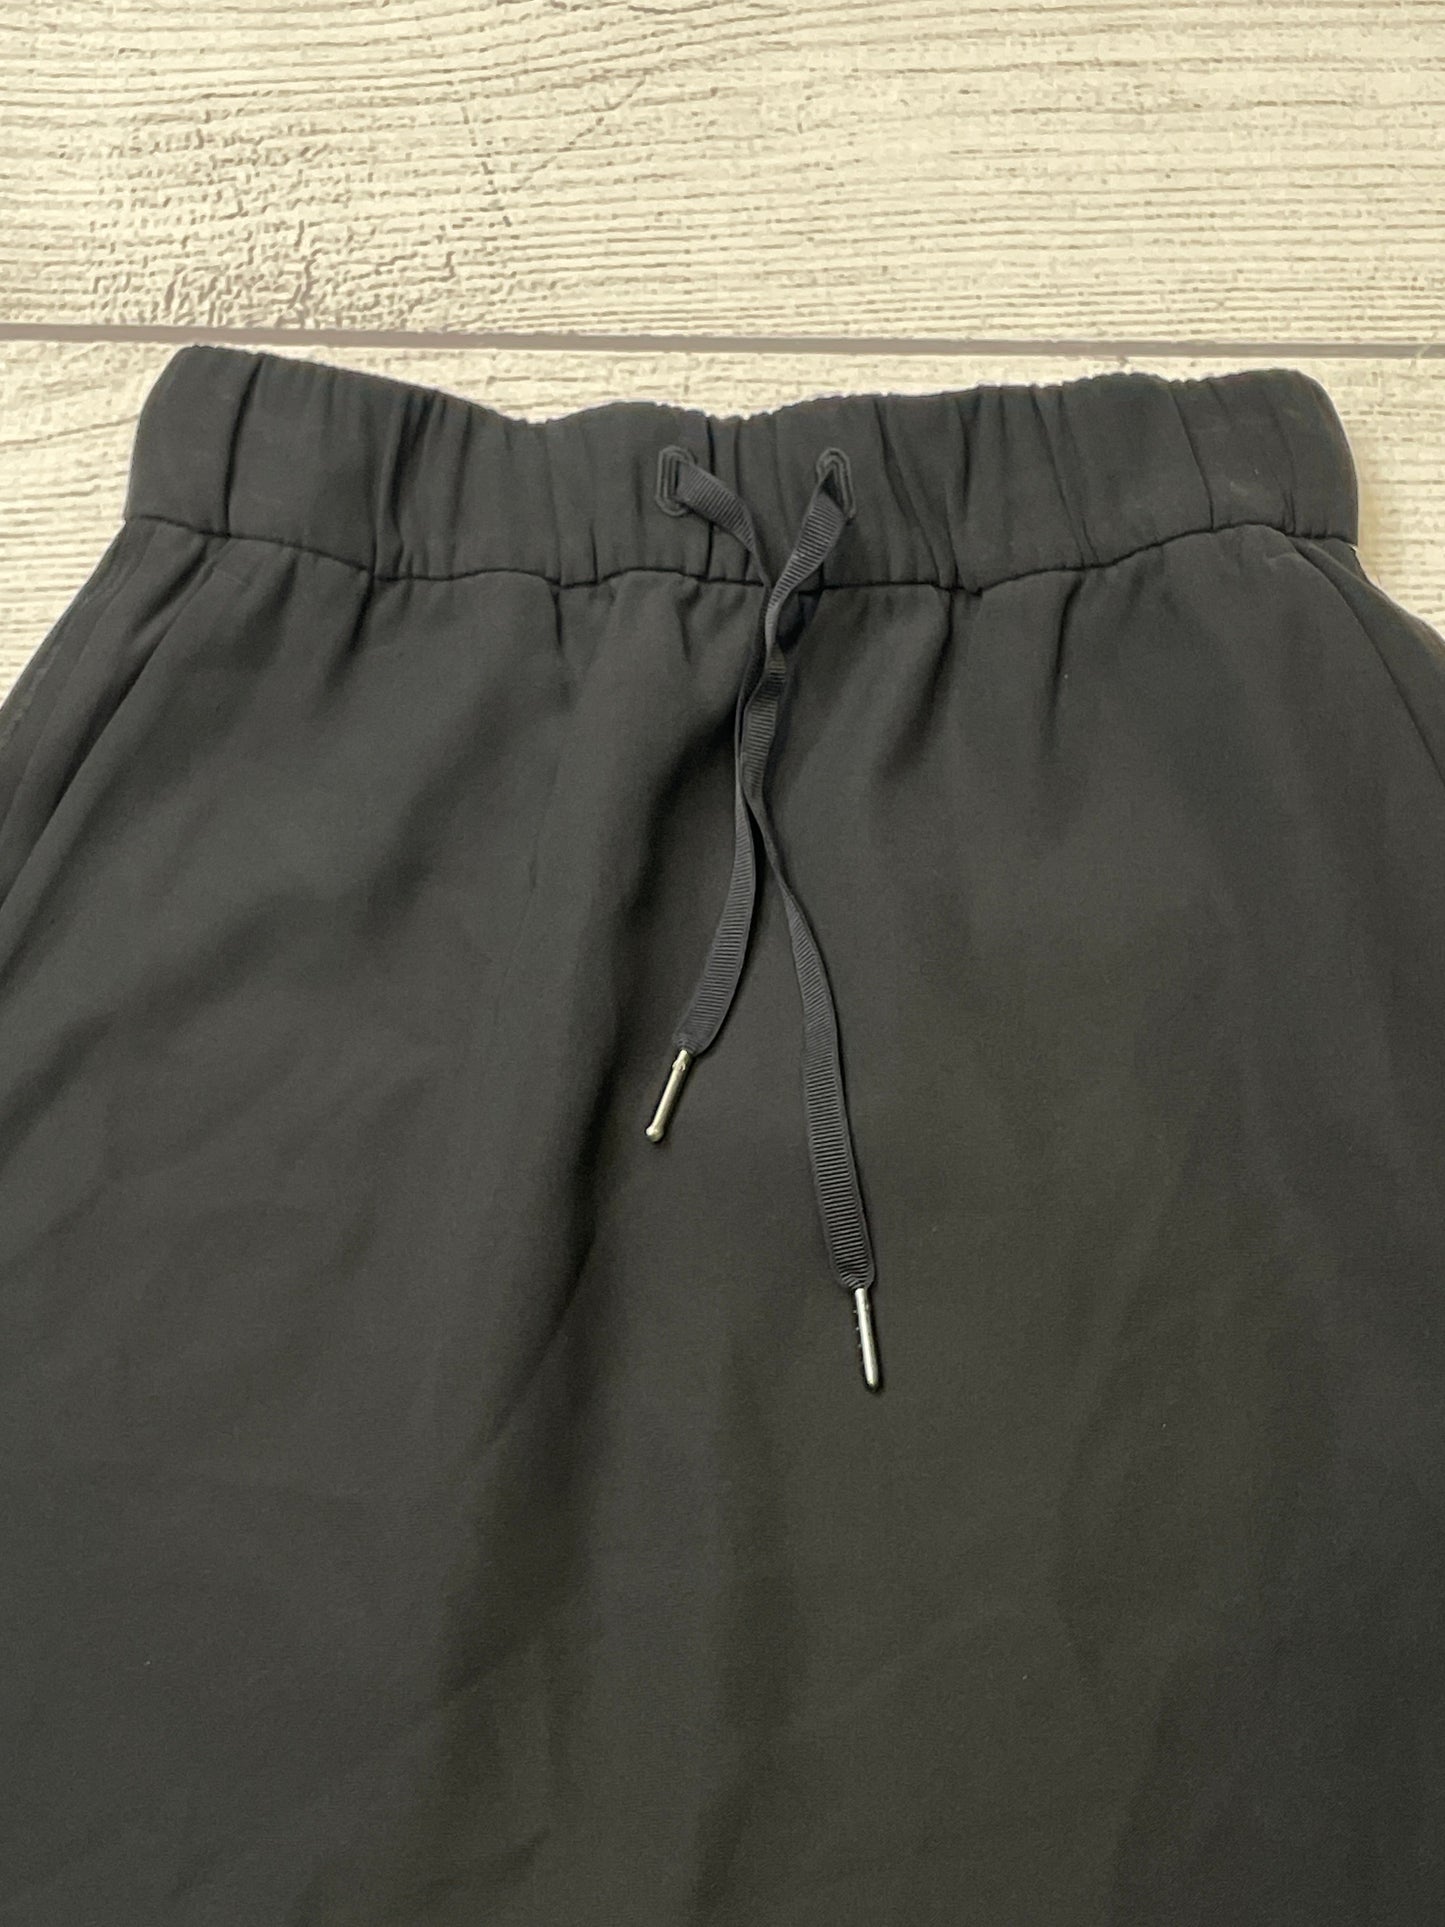 Black Athletic Skirt Skort Lululemon, Size S